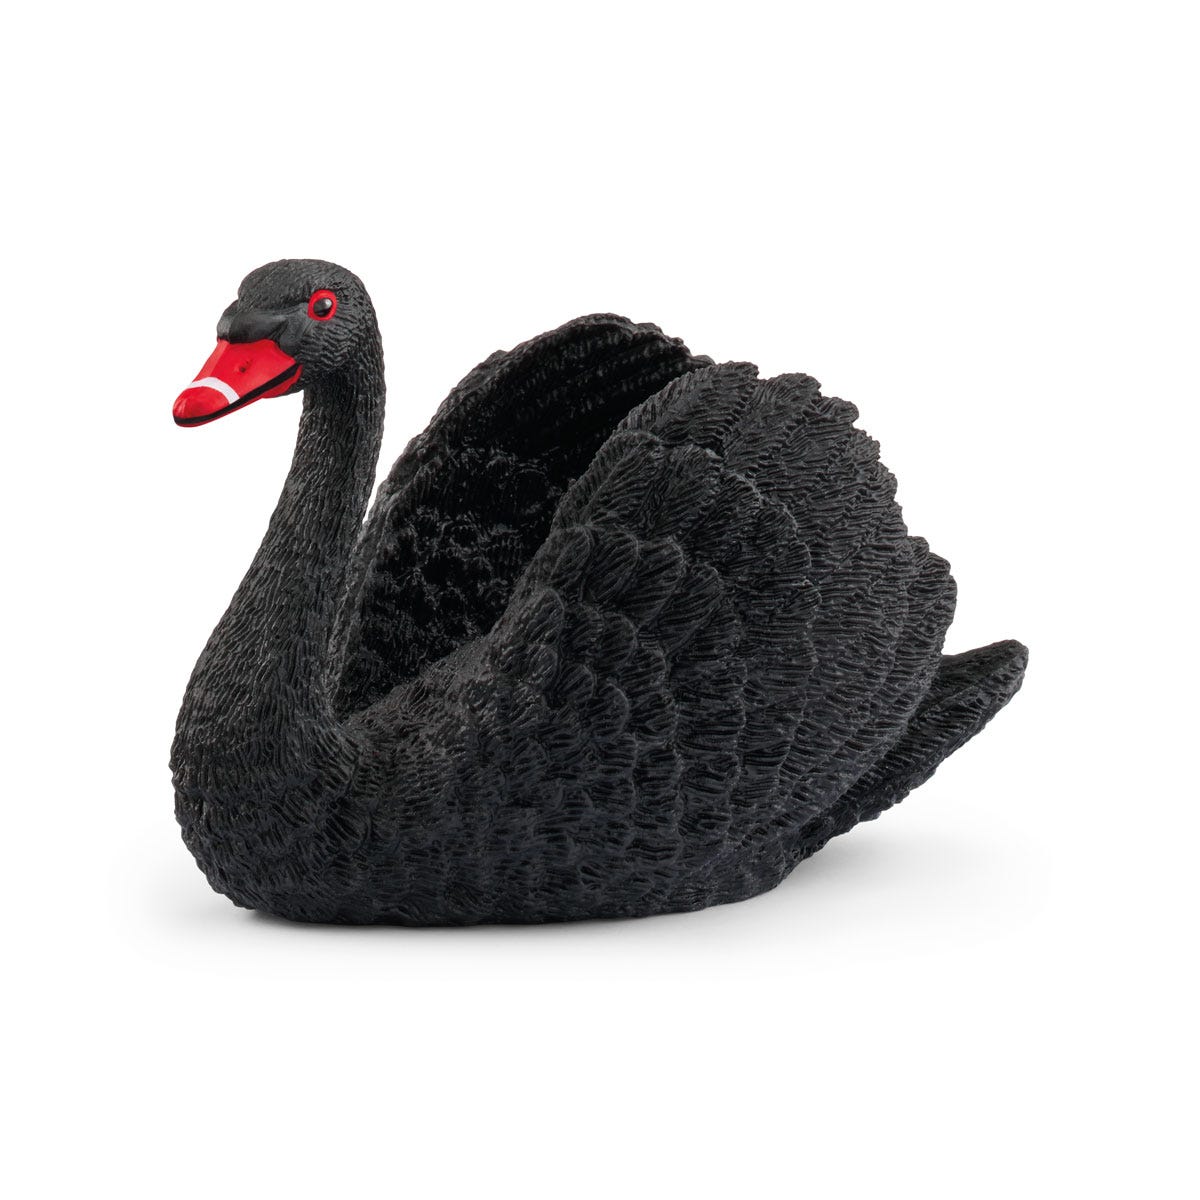 Limited-Edition Black Swan